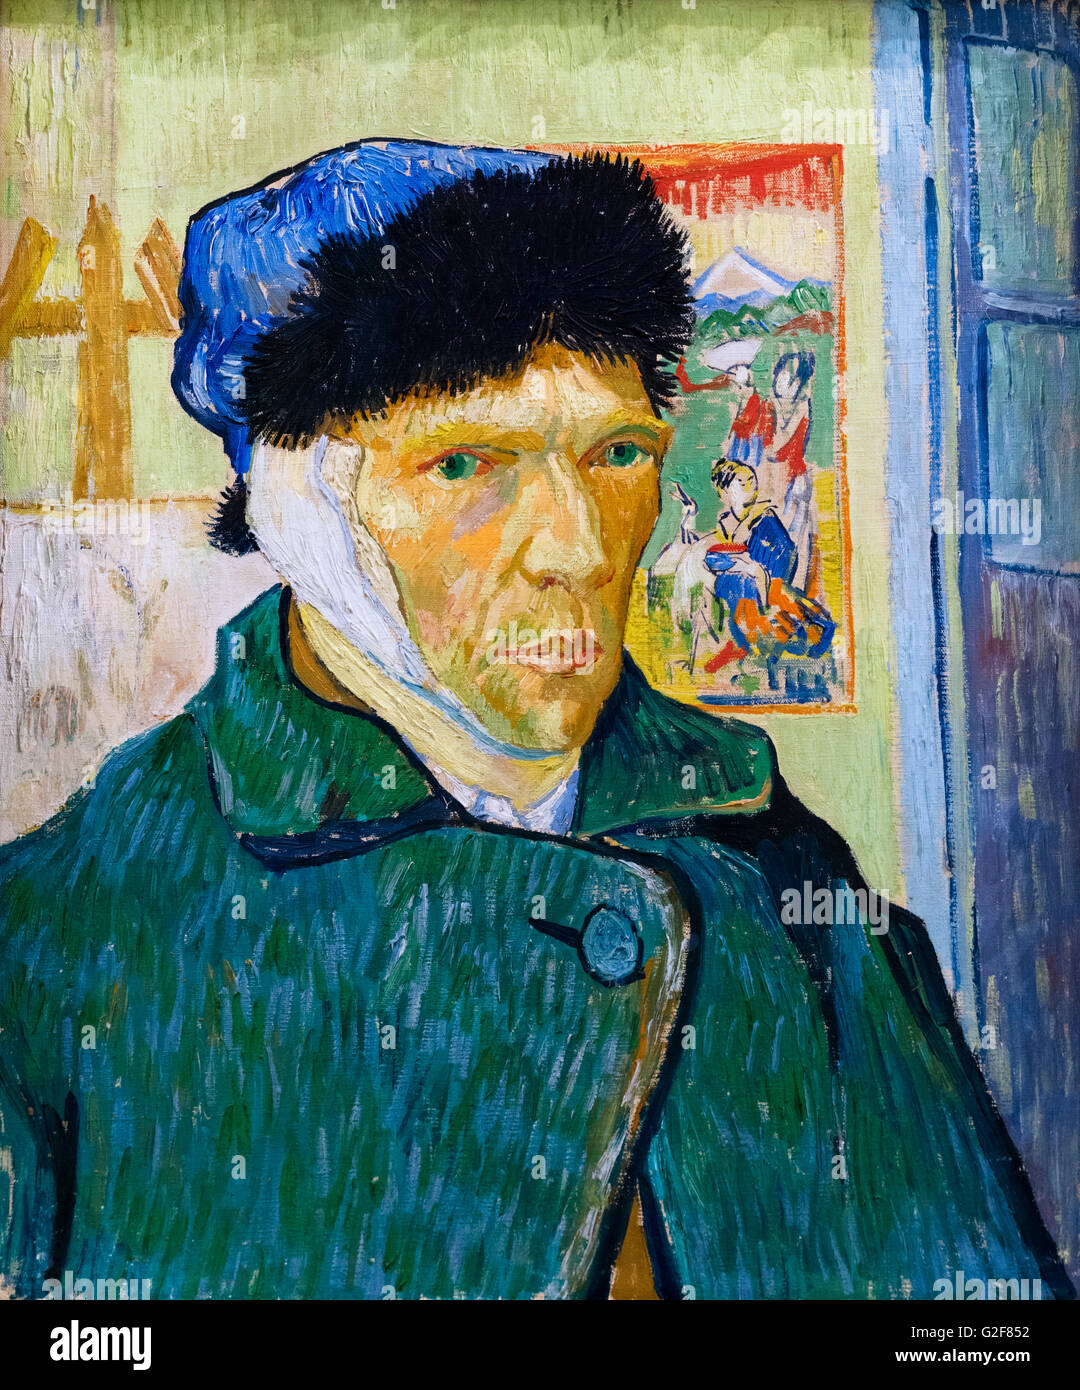 Vincent van Gogh, Selbstporträt mit verbundenem Ohr, Öl auf Leinwand, 1889. Stockfoto